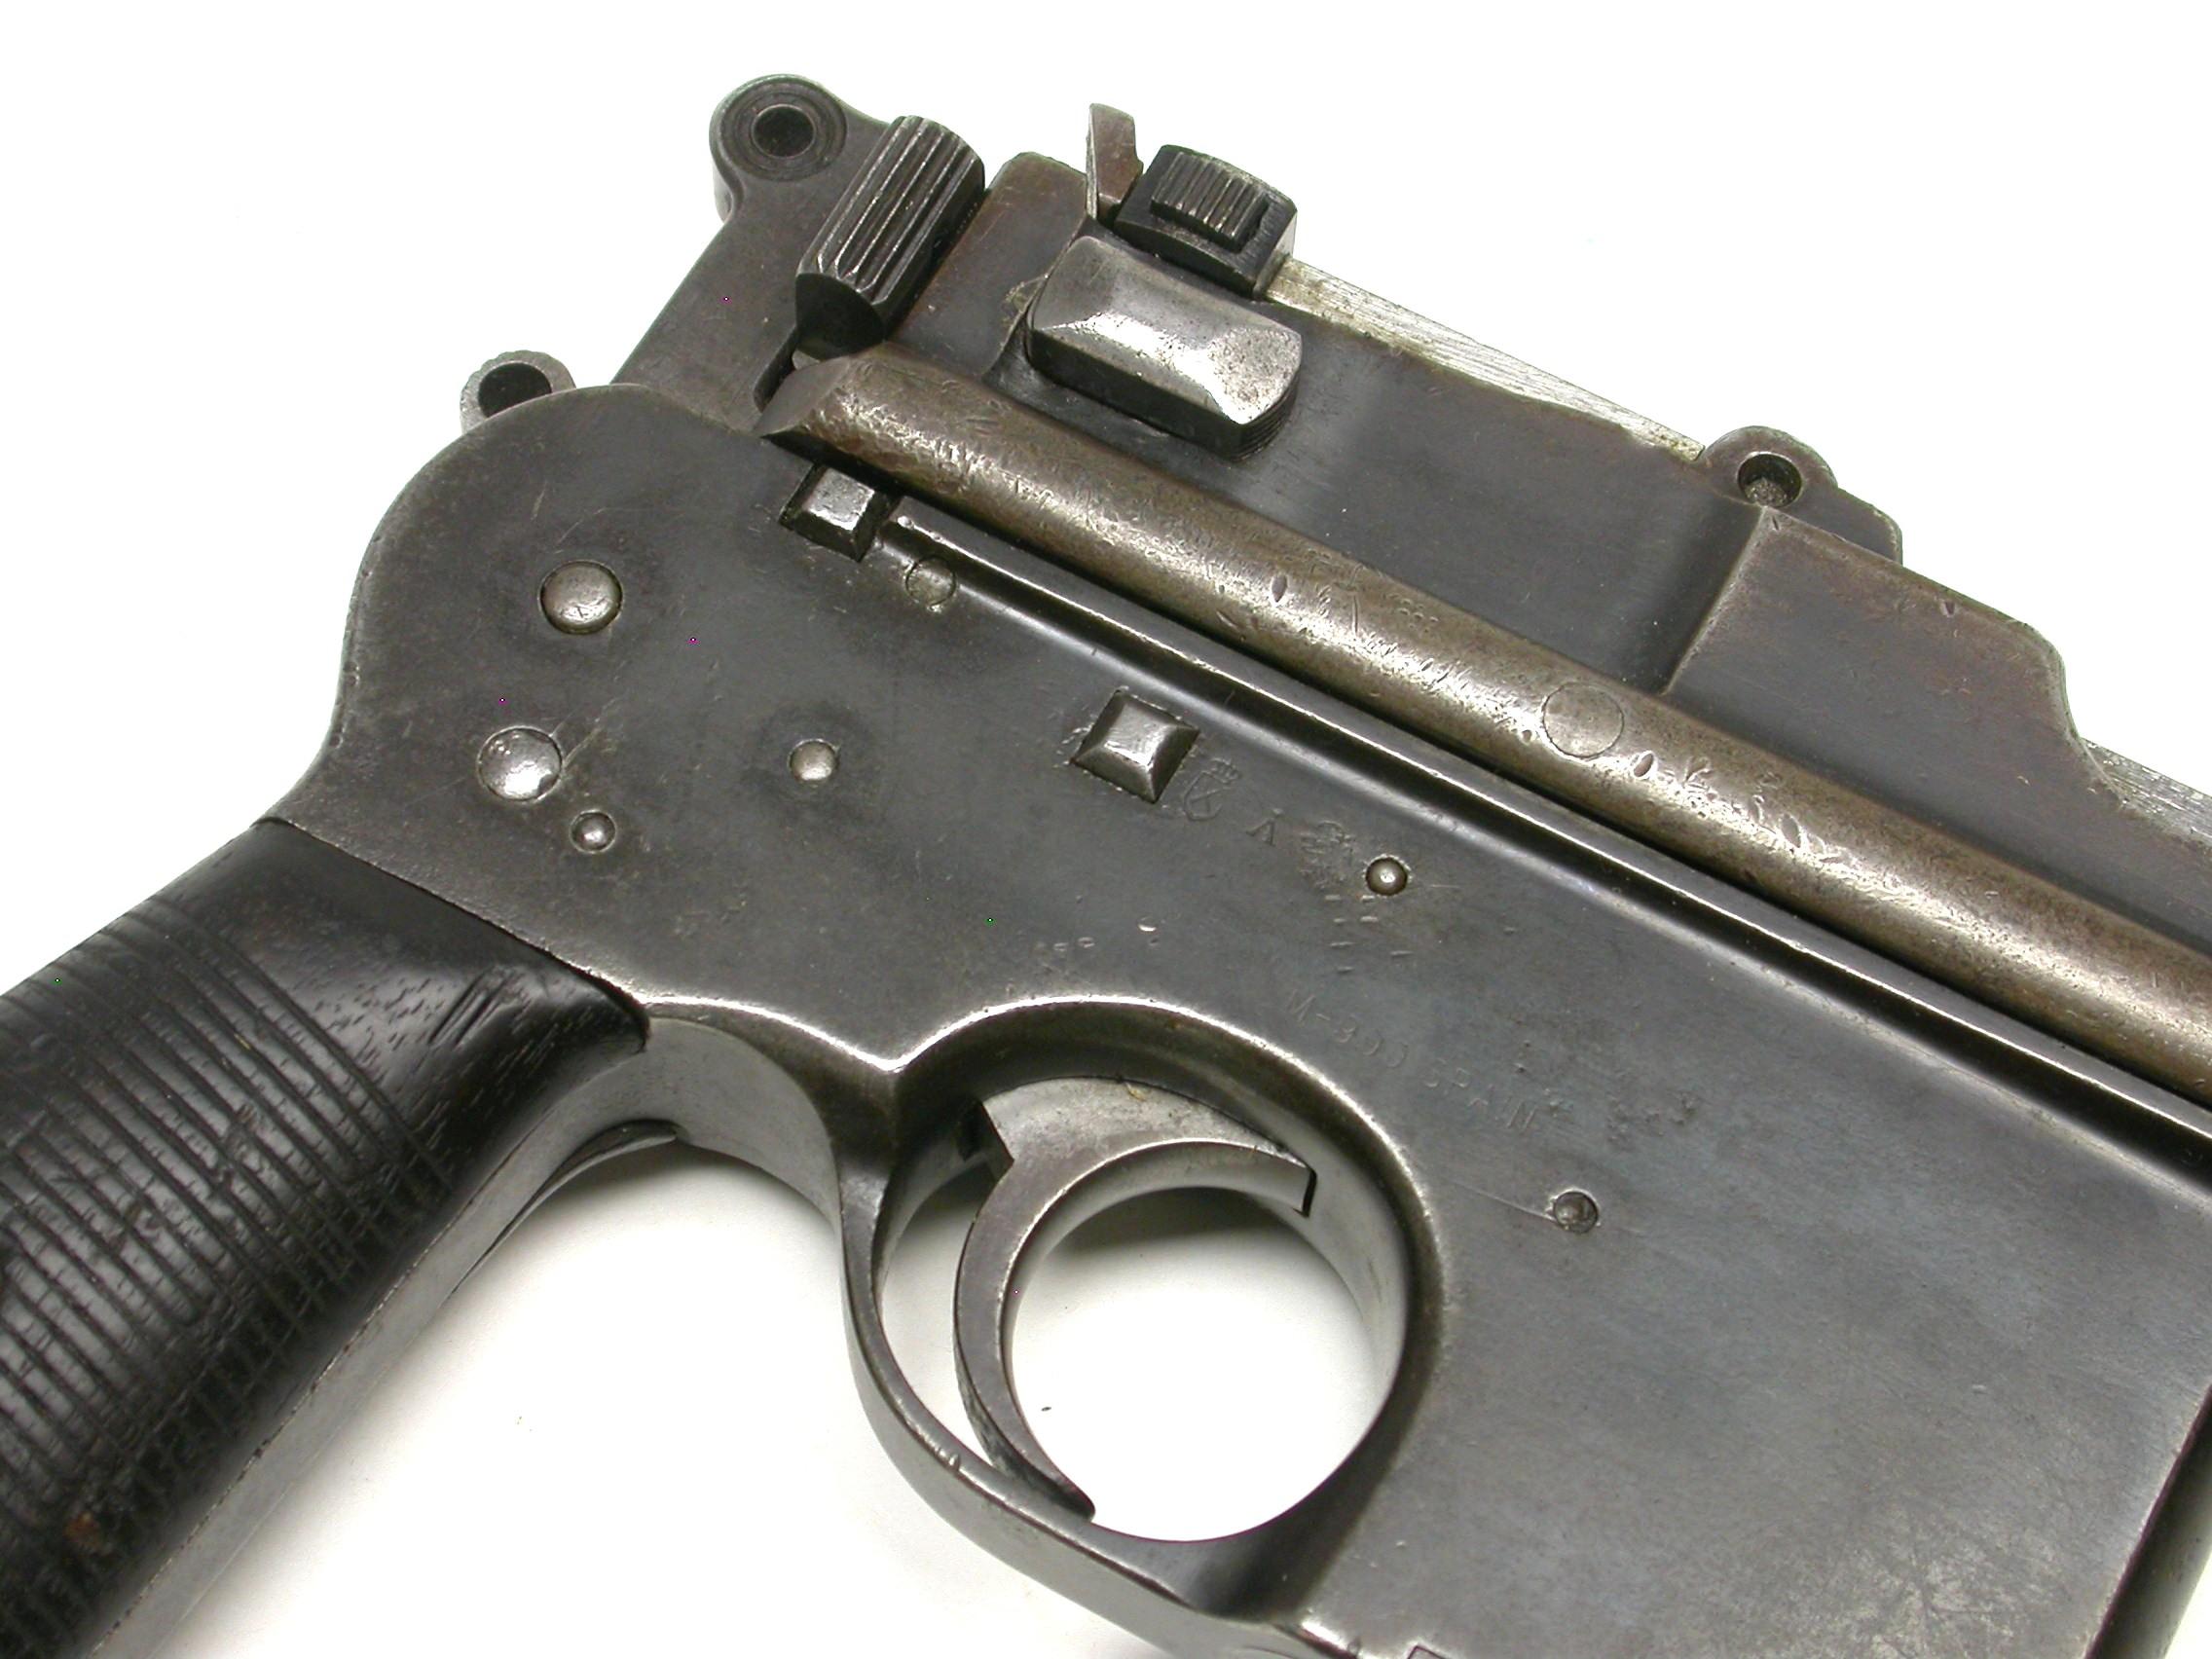 Spanish Astra Model 900 7.63mm Broomhandle Semi-Automatic Pistol - FFL #4339 (RH1)